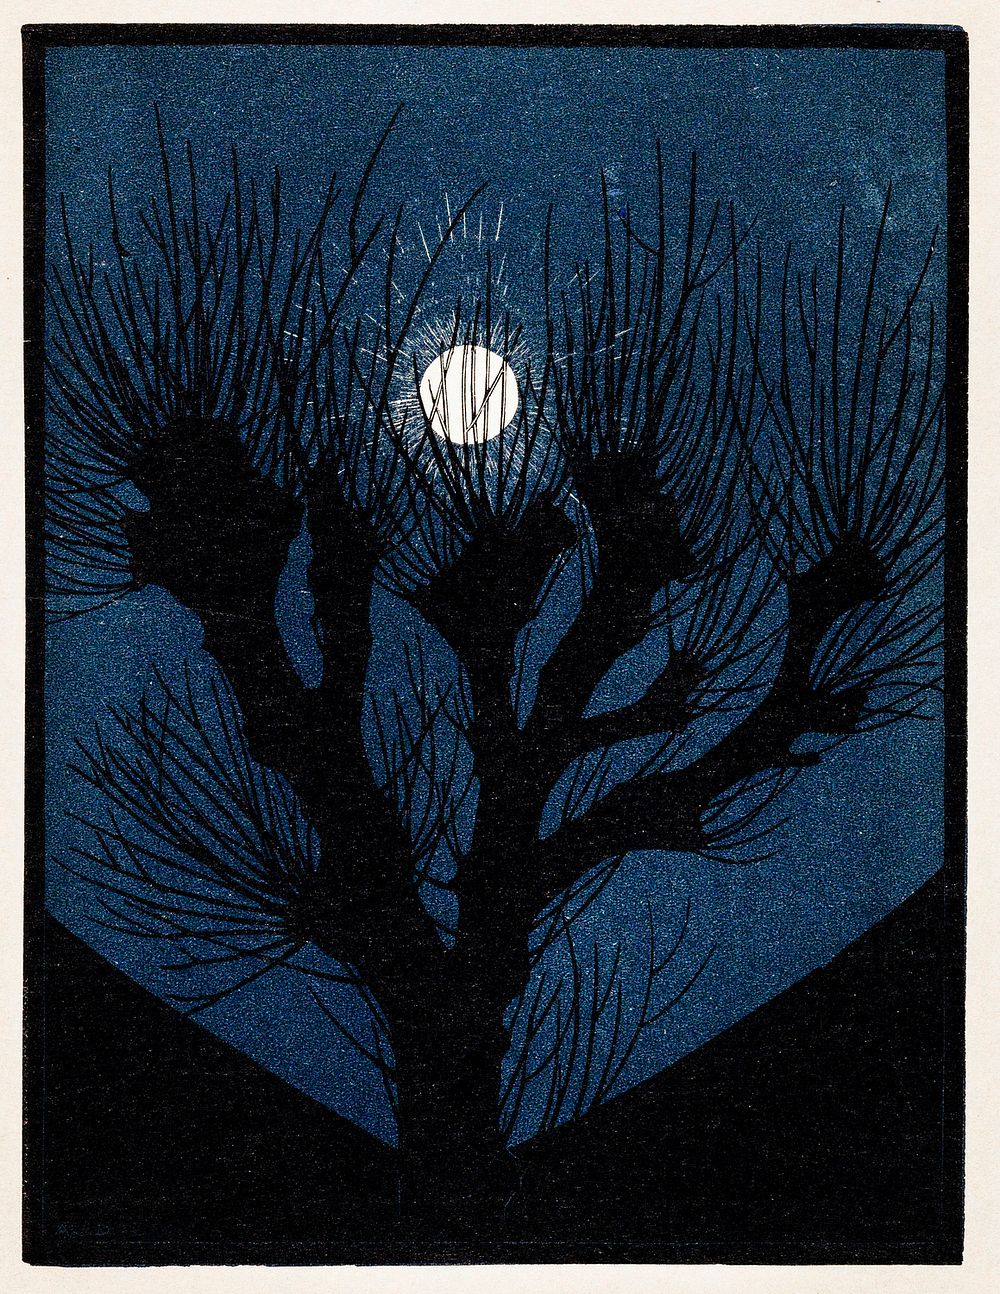 Moon Light (1920) by Julie de Graag (1877-1924). Original from The Rijksmuseum. Digitally enhanced by rawpixel.